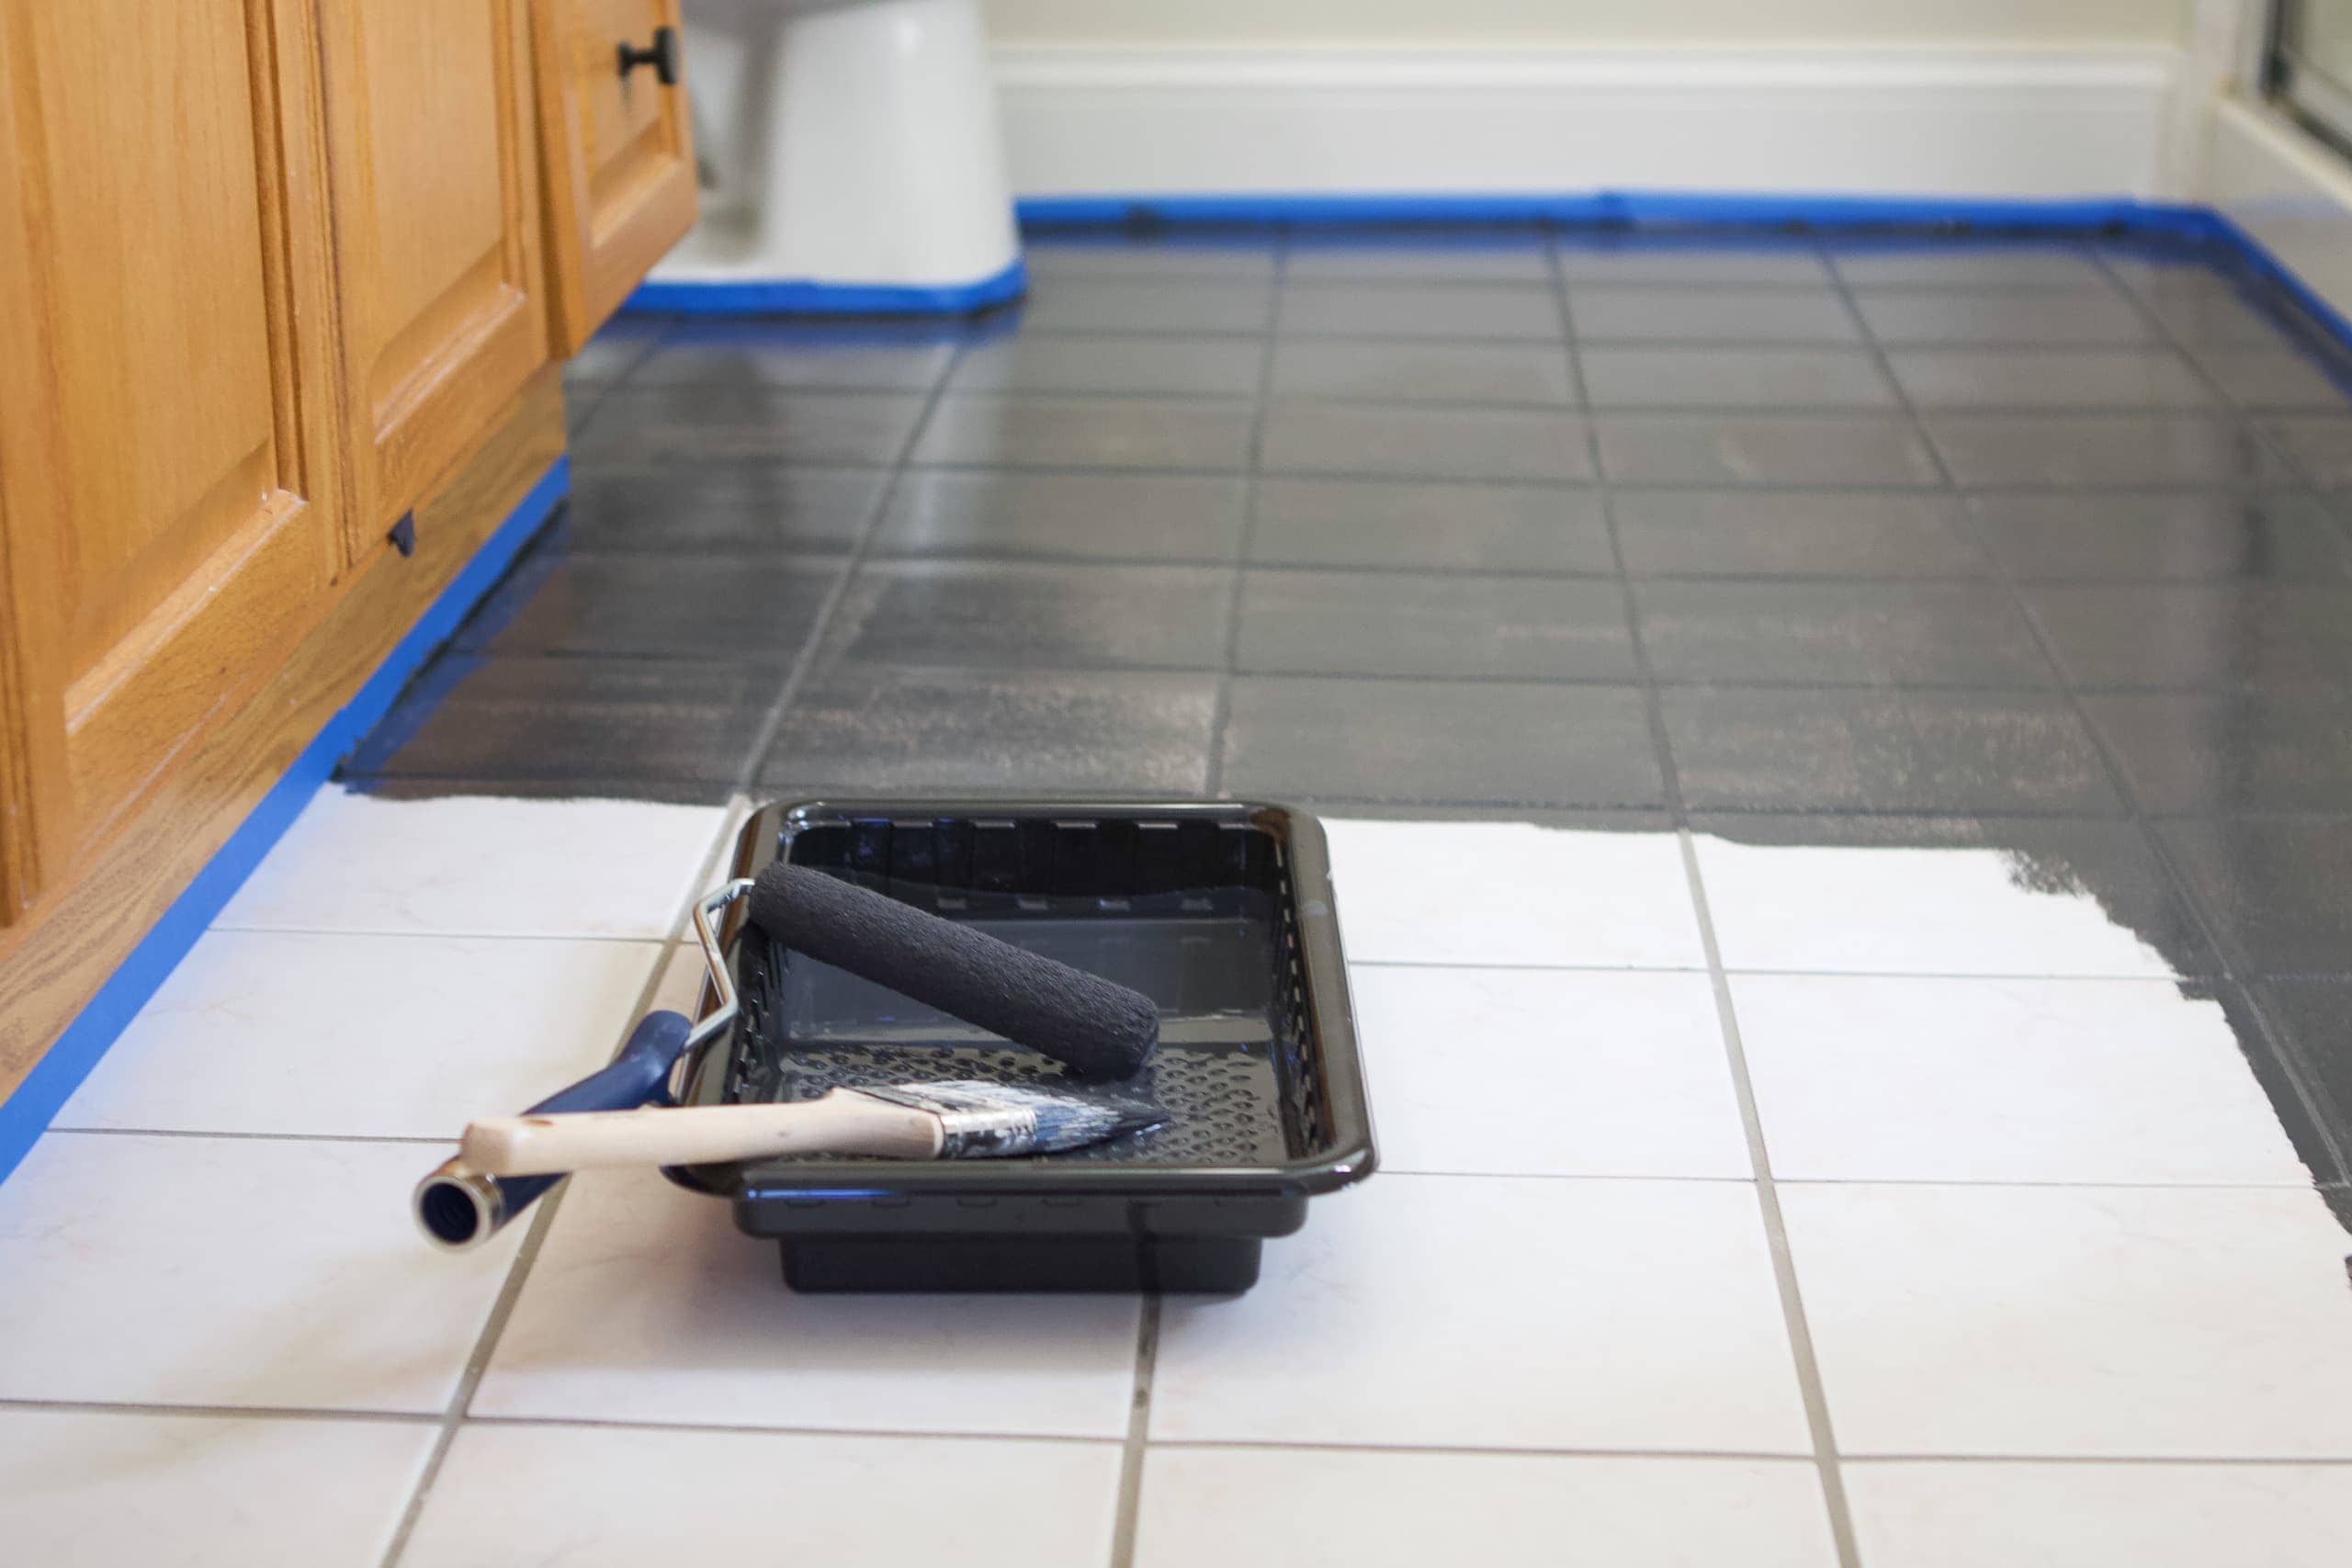 Tips to paint floor tile